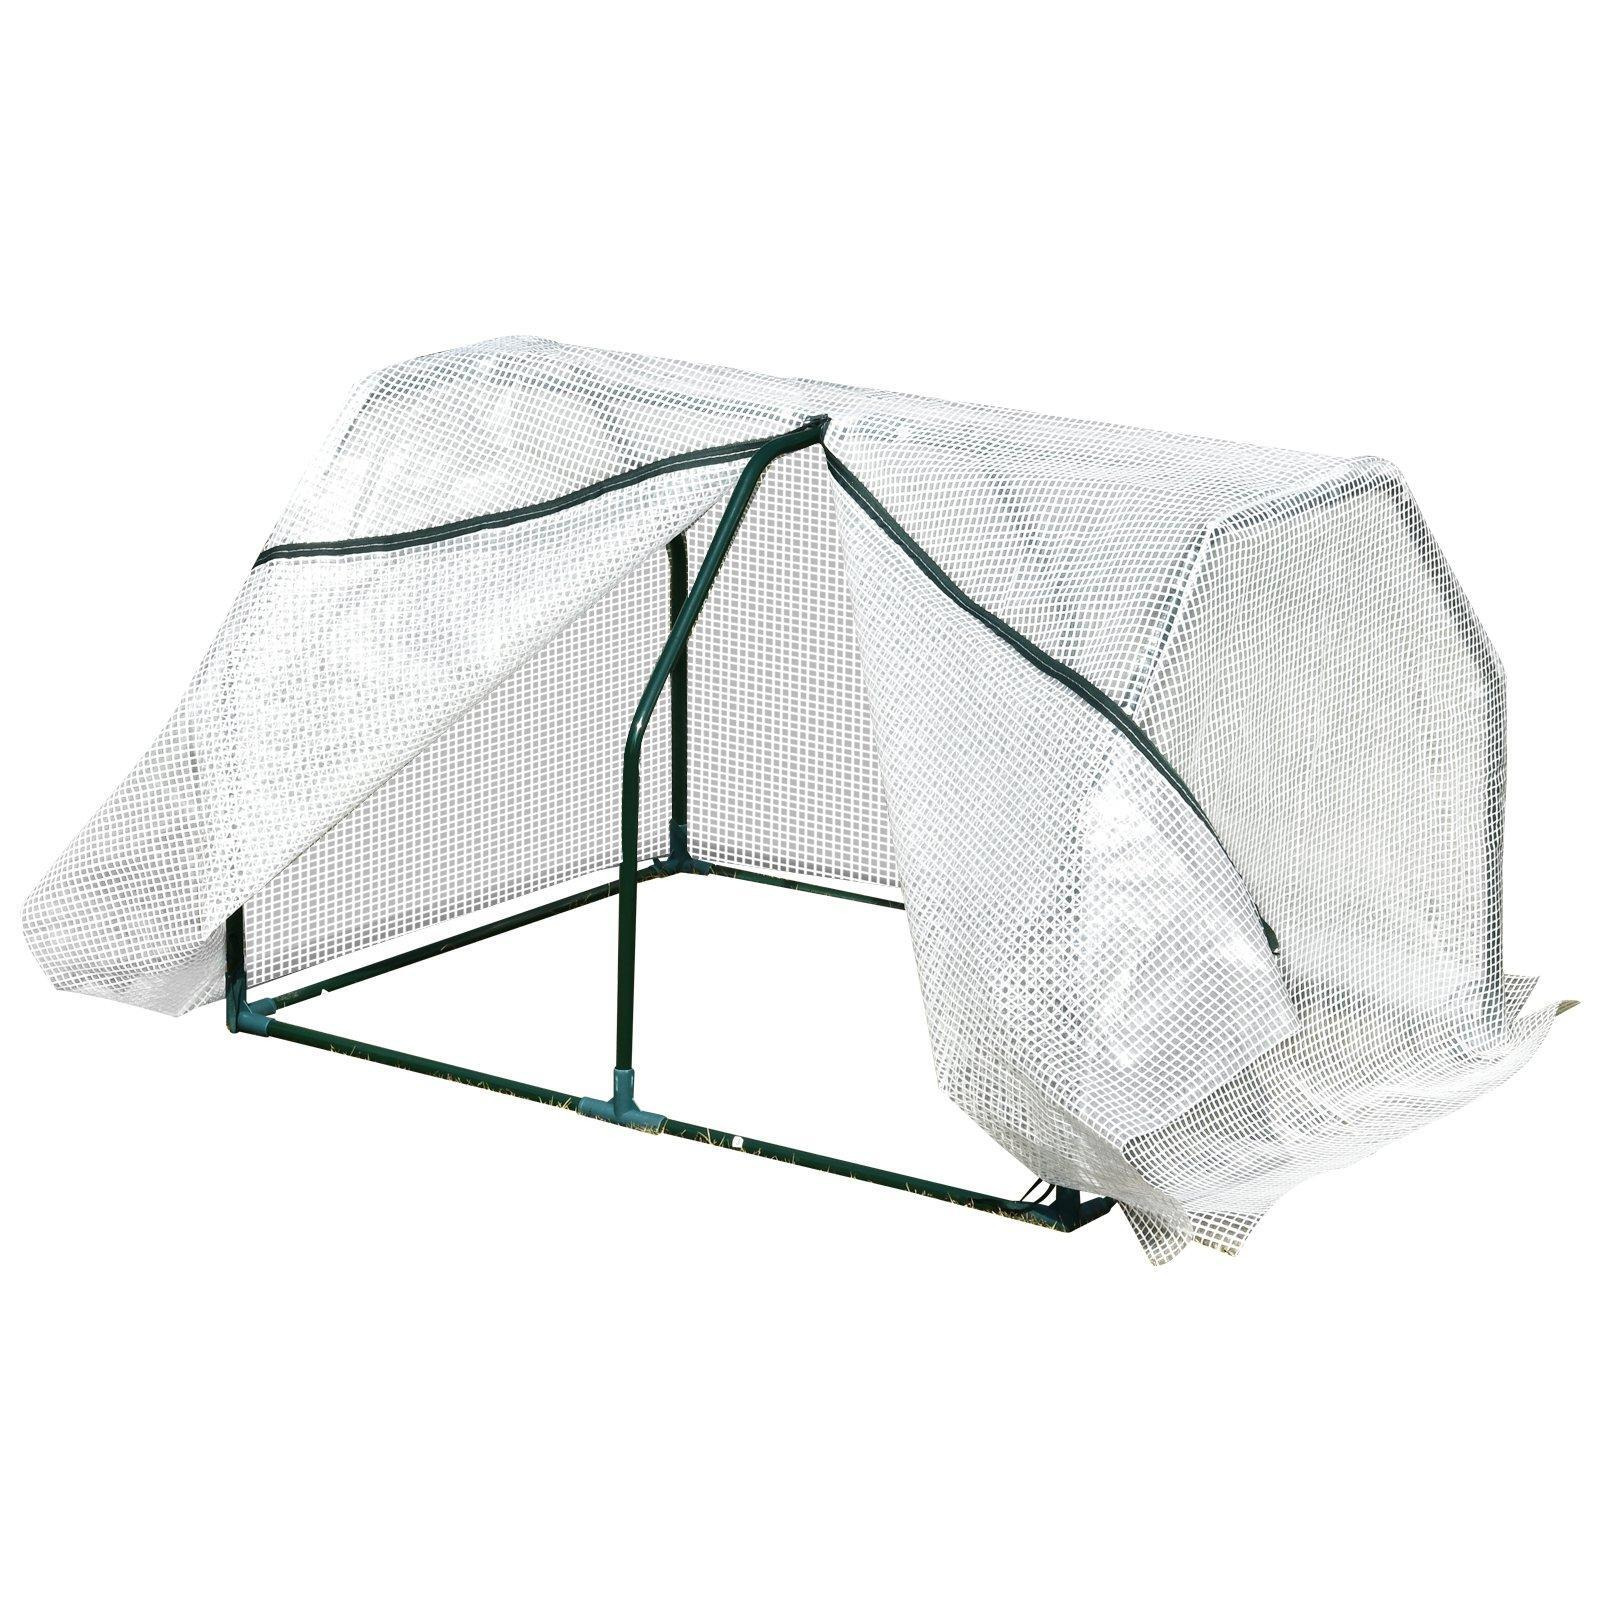 Mini  Greenhouse Grow House PVC Cover Steel Frame 99 x 71 x 60cm - image 1